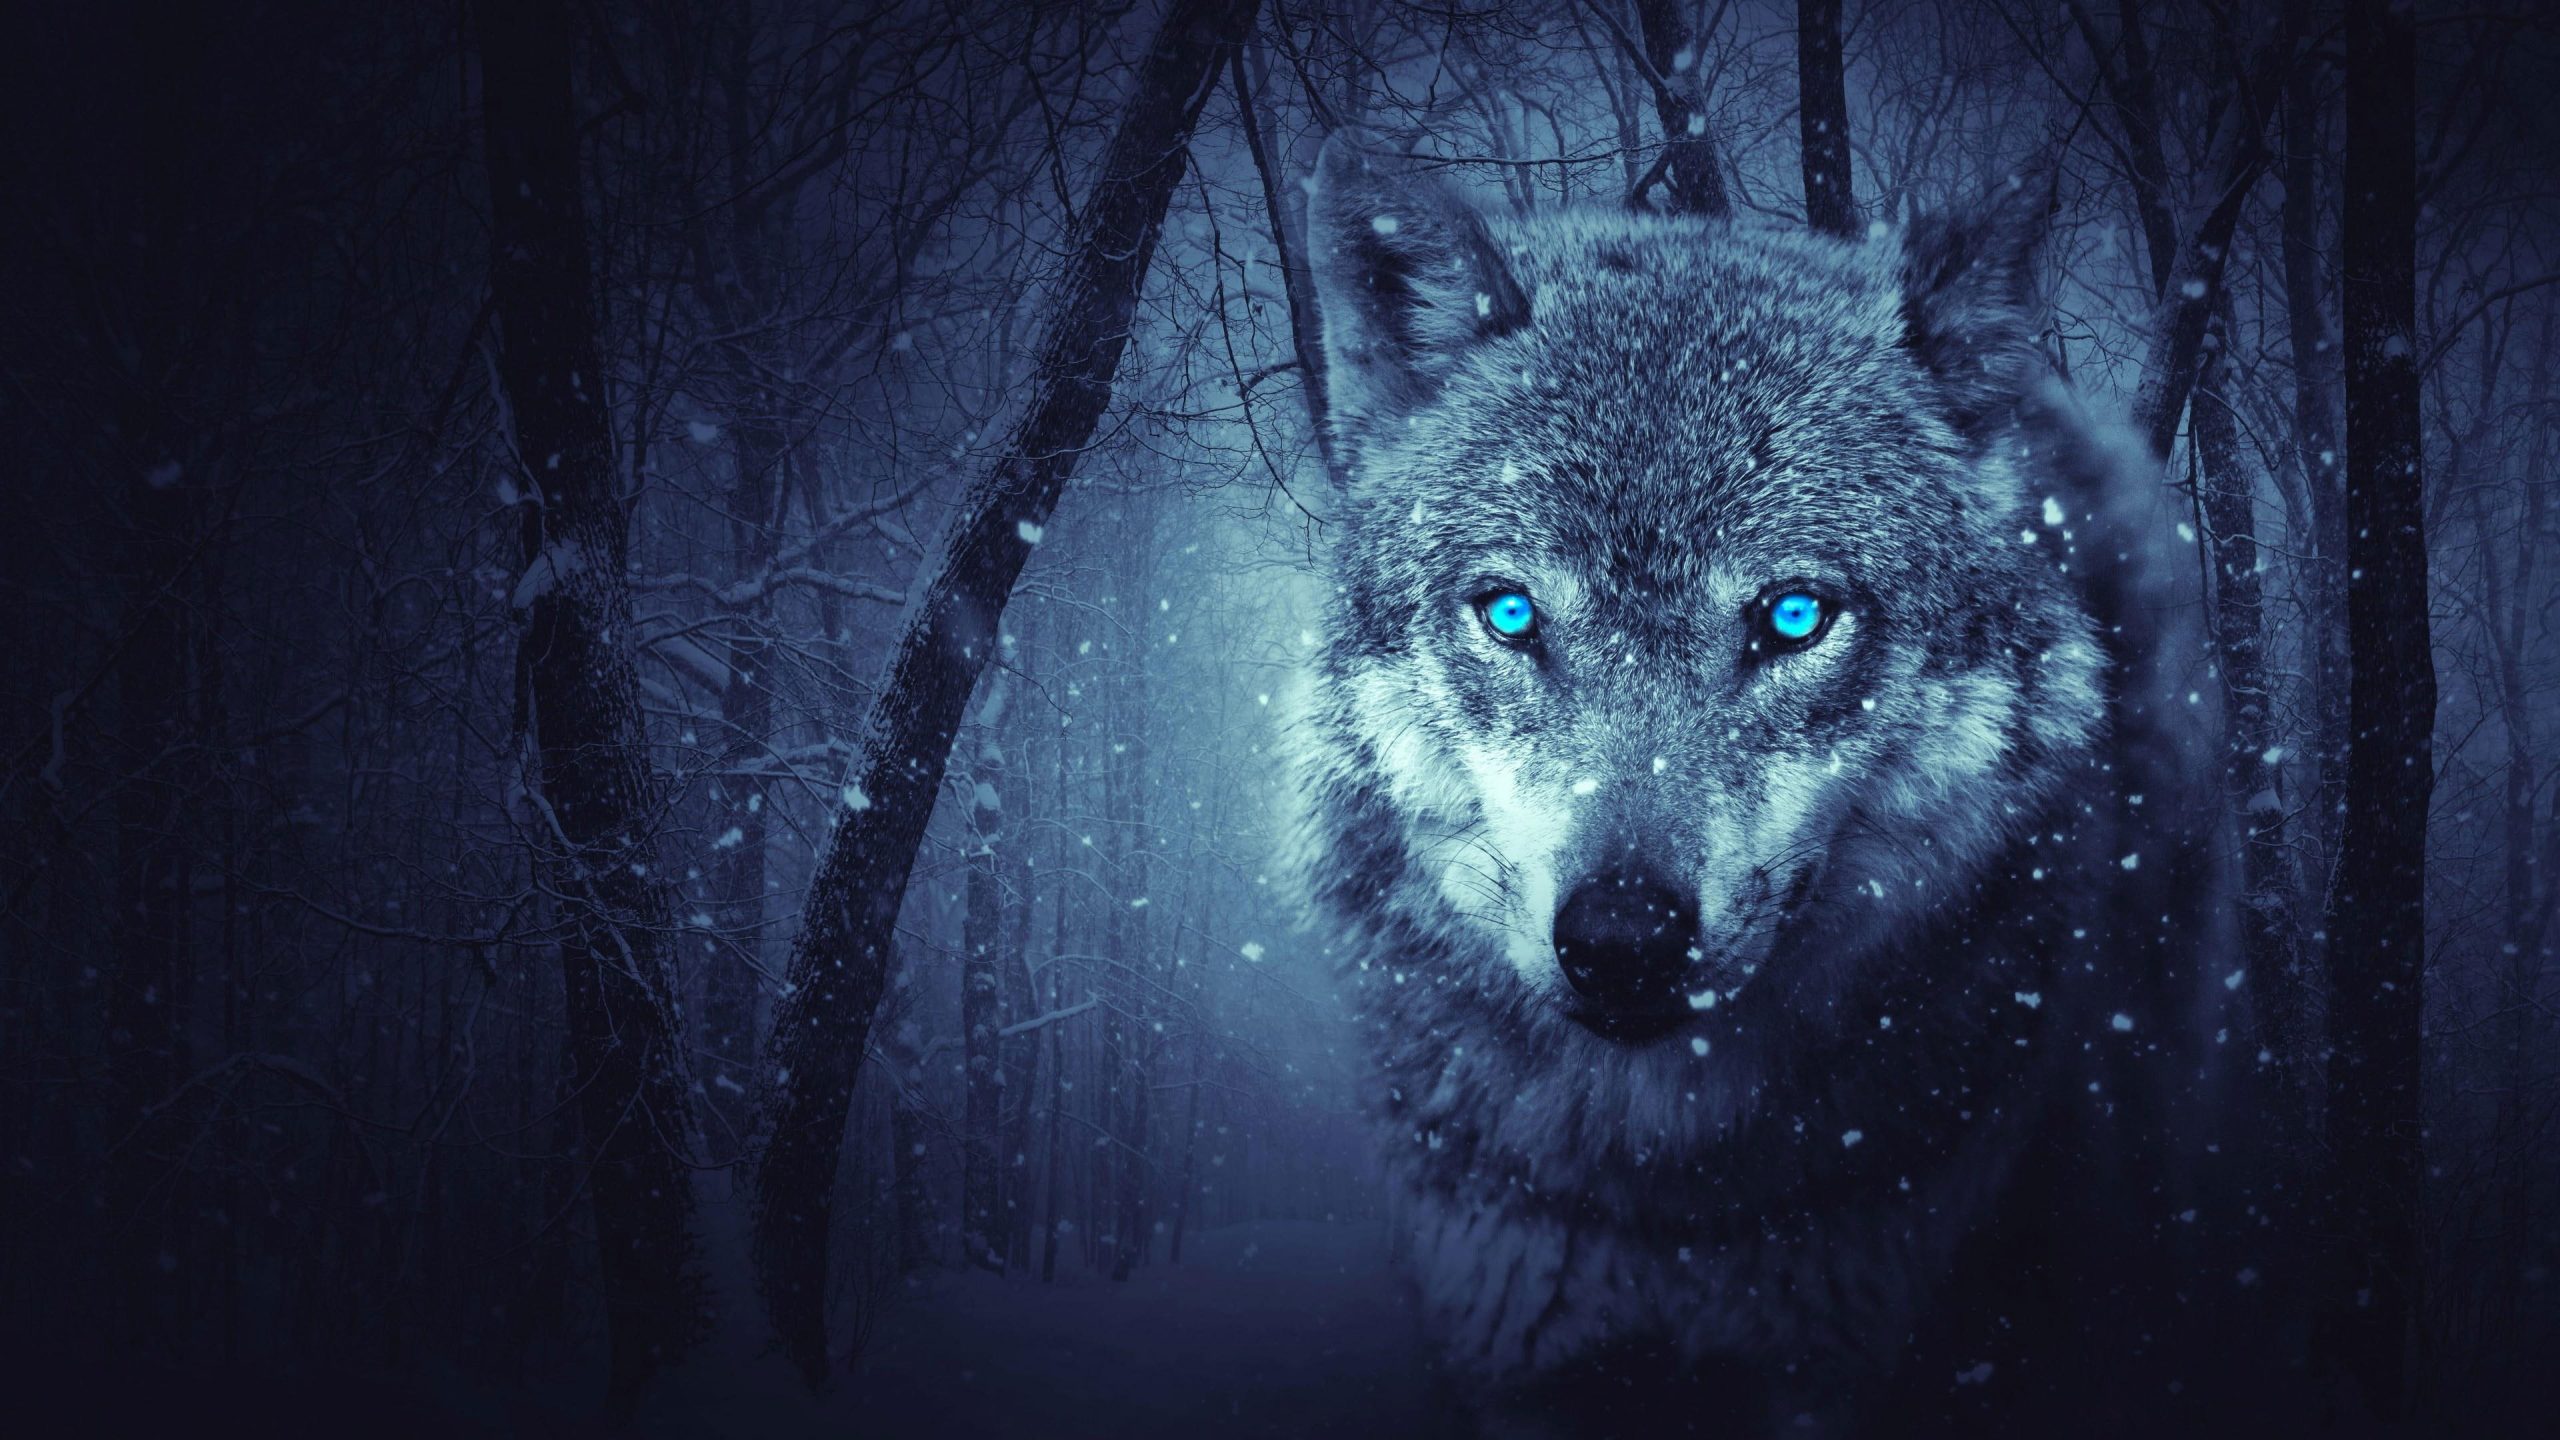 Wolf wallpaper, winter, fantasy, forest, snowing, wild animal